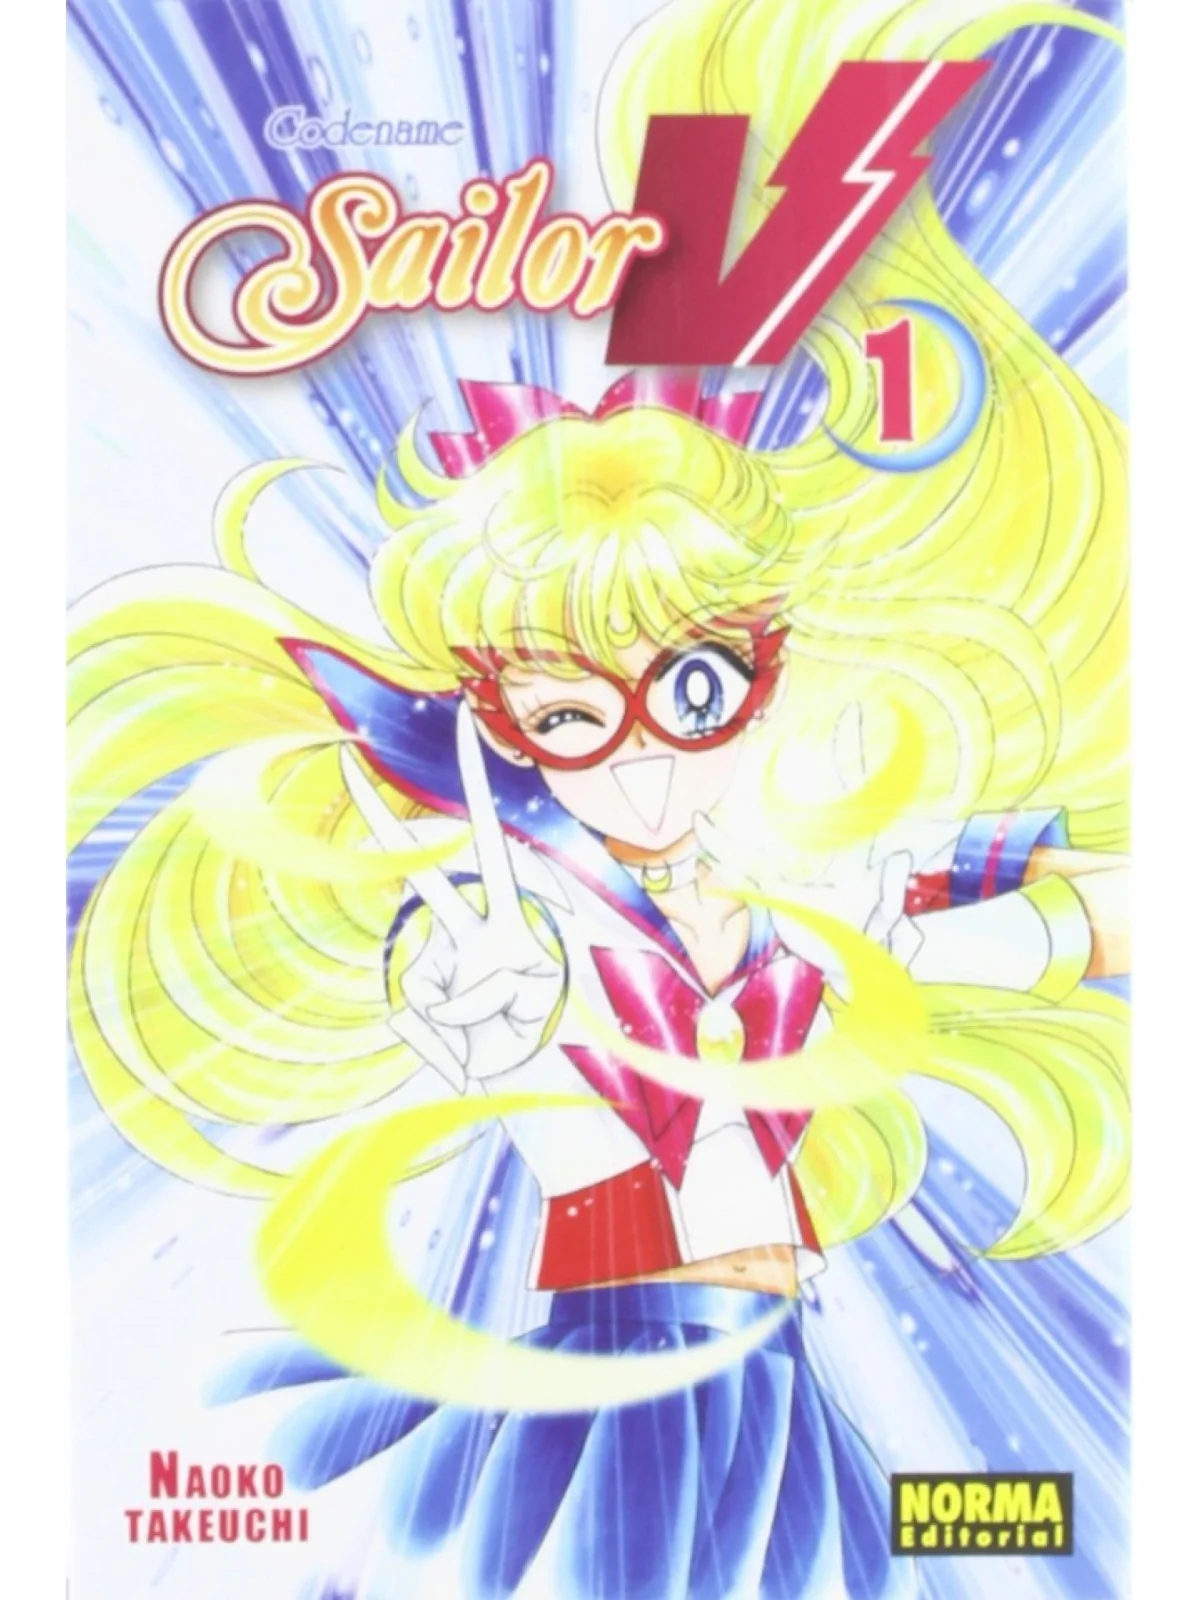 Comprar 1.sailor V (Comic manga) barato al mejor precio 7,60 € de Norm